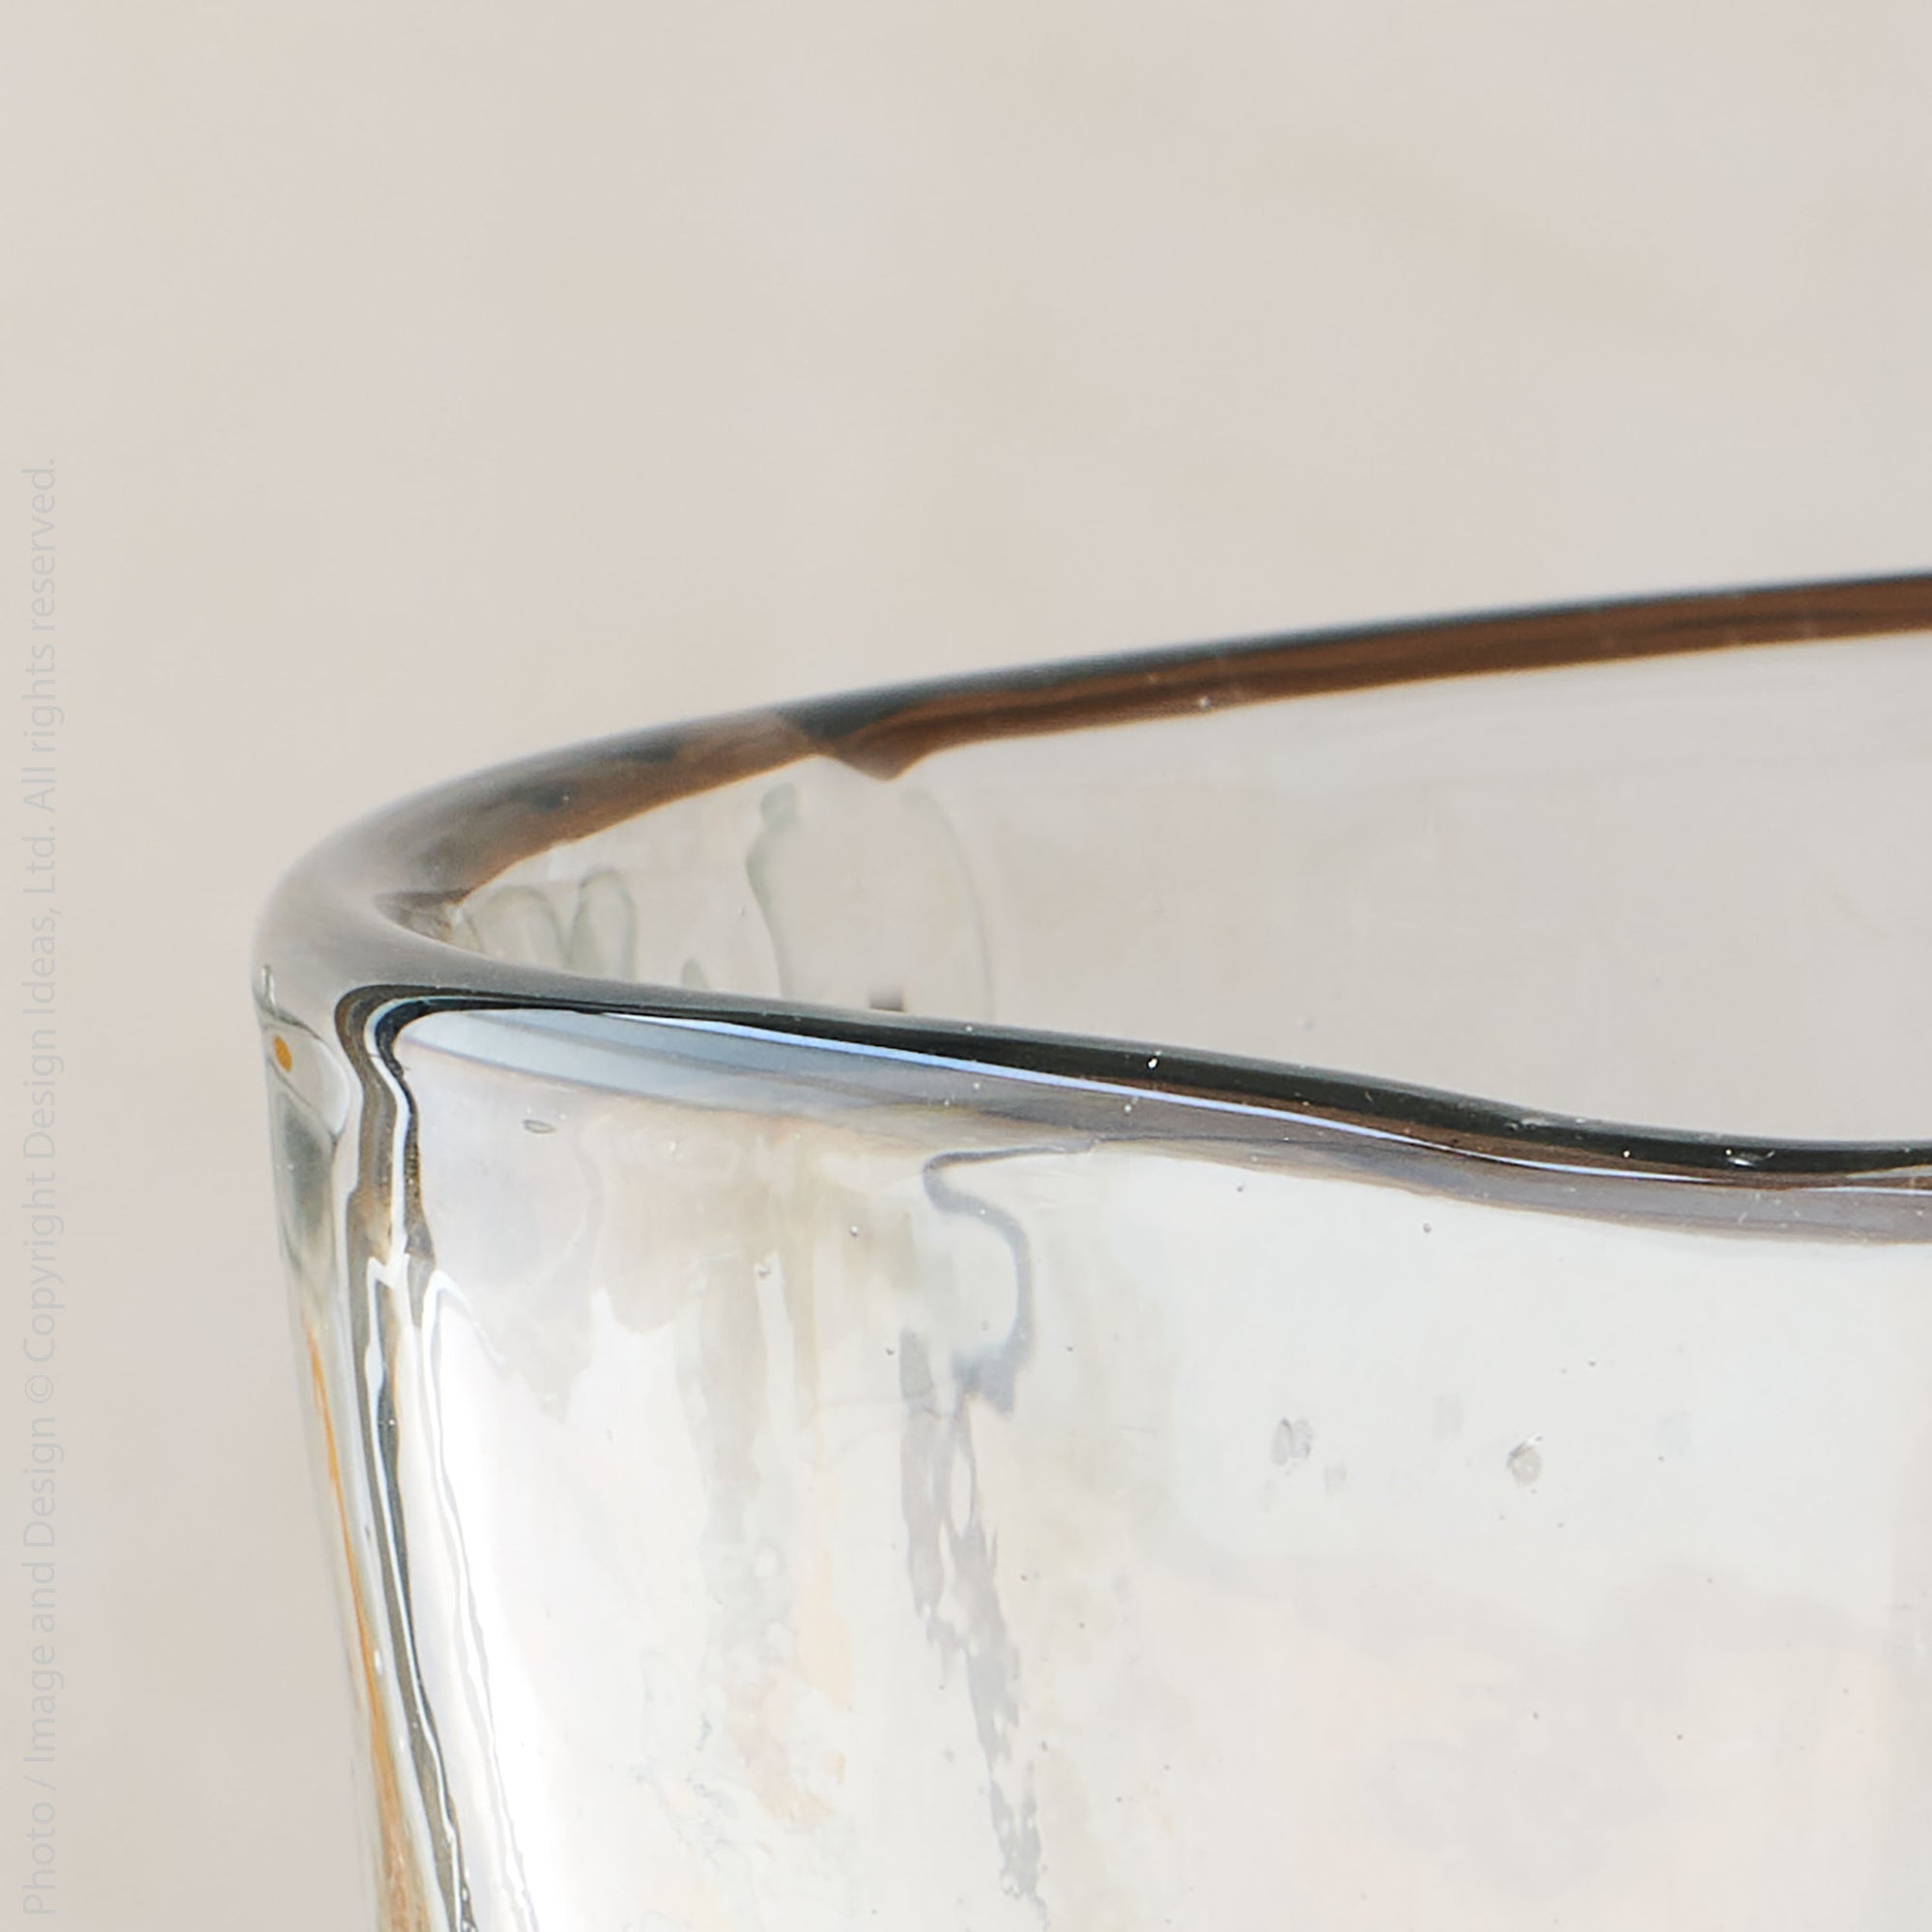 Wabisabi™ Hand Kneaded Shot Glasses (set of 4)